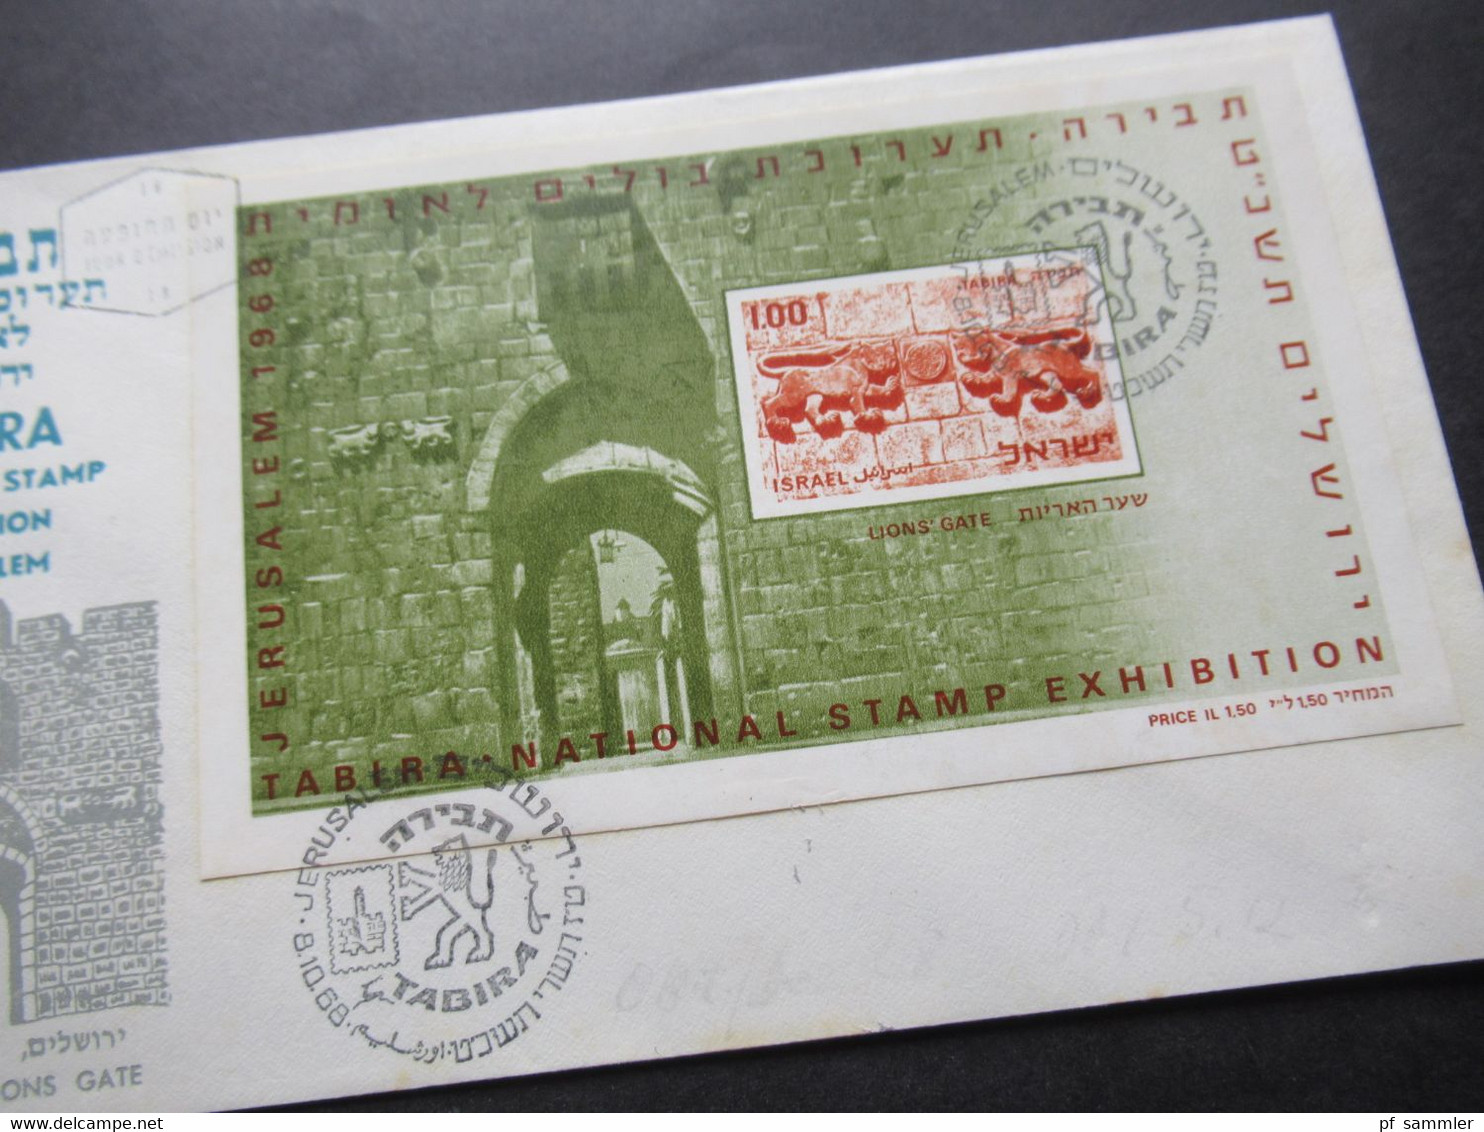 Israel 1970 Motivmarken 2x Block 2 Sonderbelege National Stamp Exhibition Tabit / Tabira / FDC ?? Jerusalem - Briefe U. Dokumente